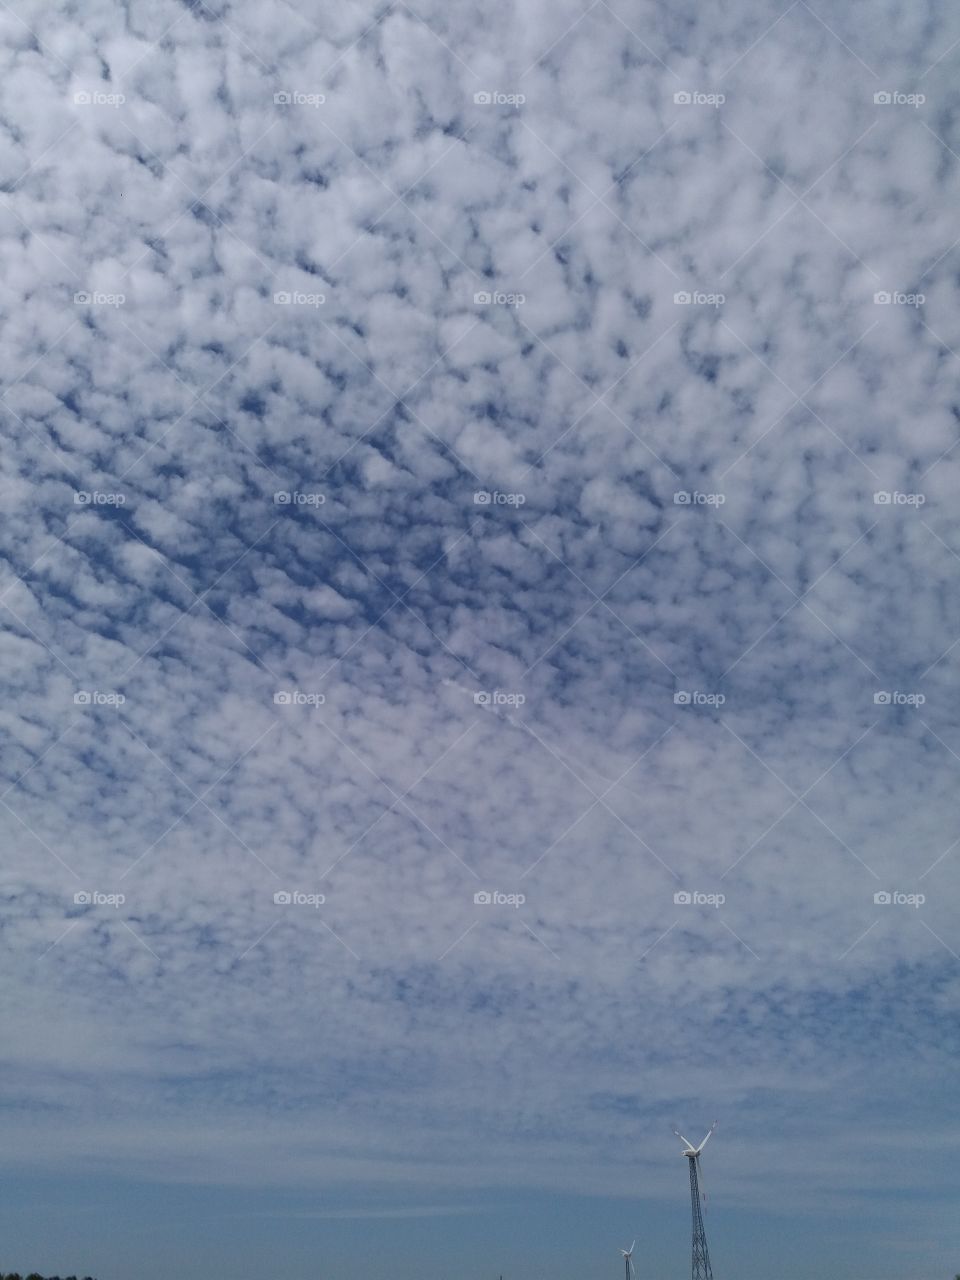 cottony spread on sky